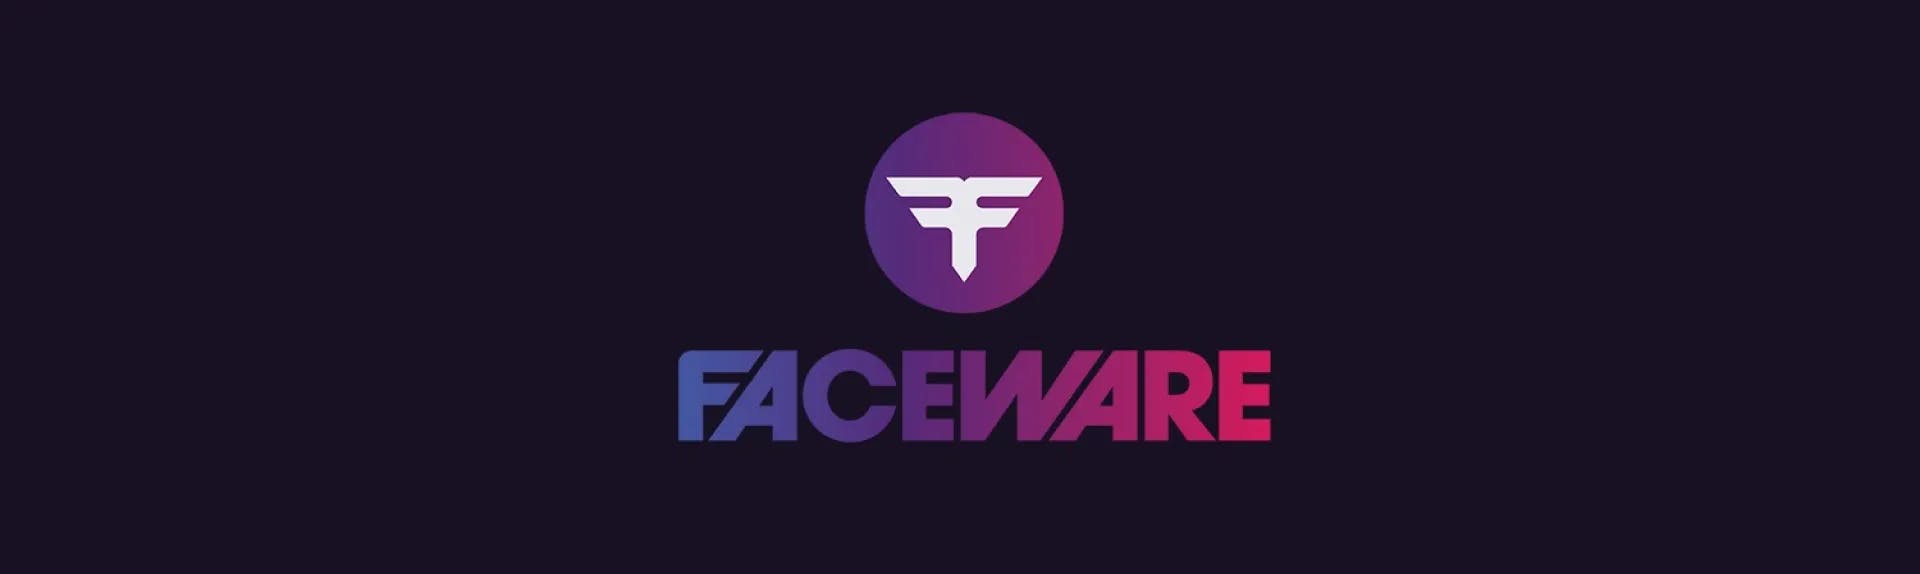 Faceware Promotion banner